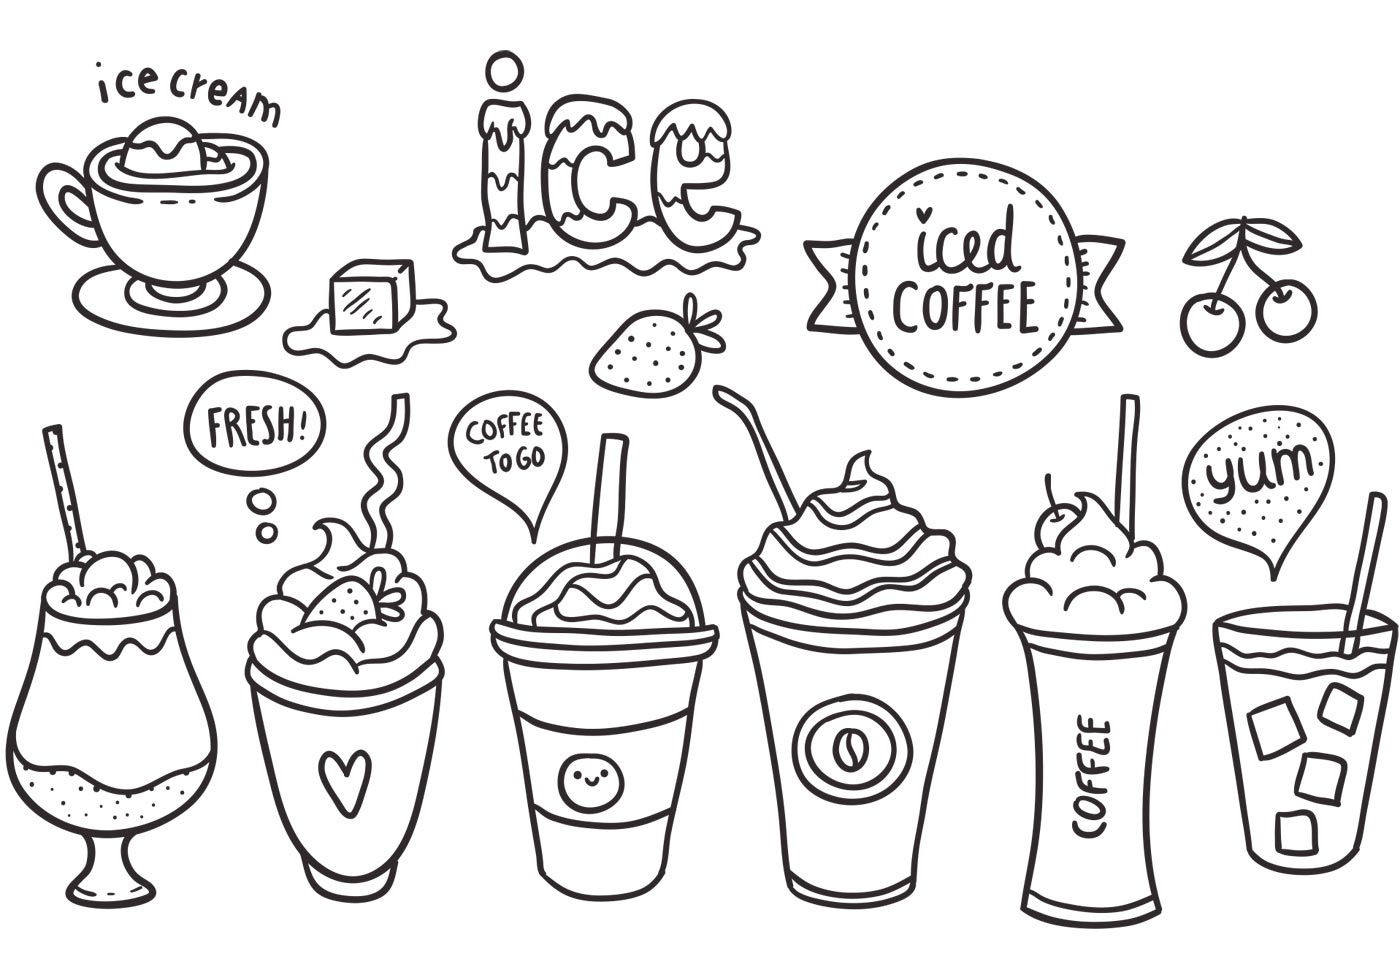 iced coffee clipart - photo #50